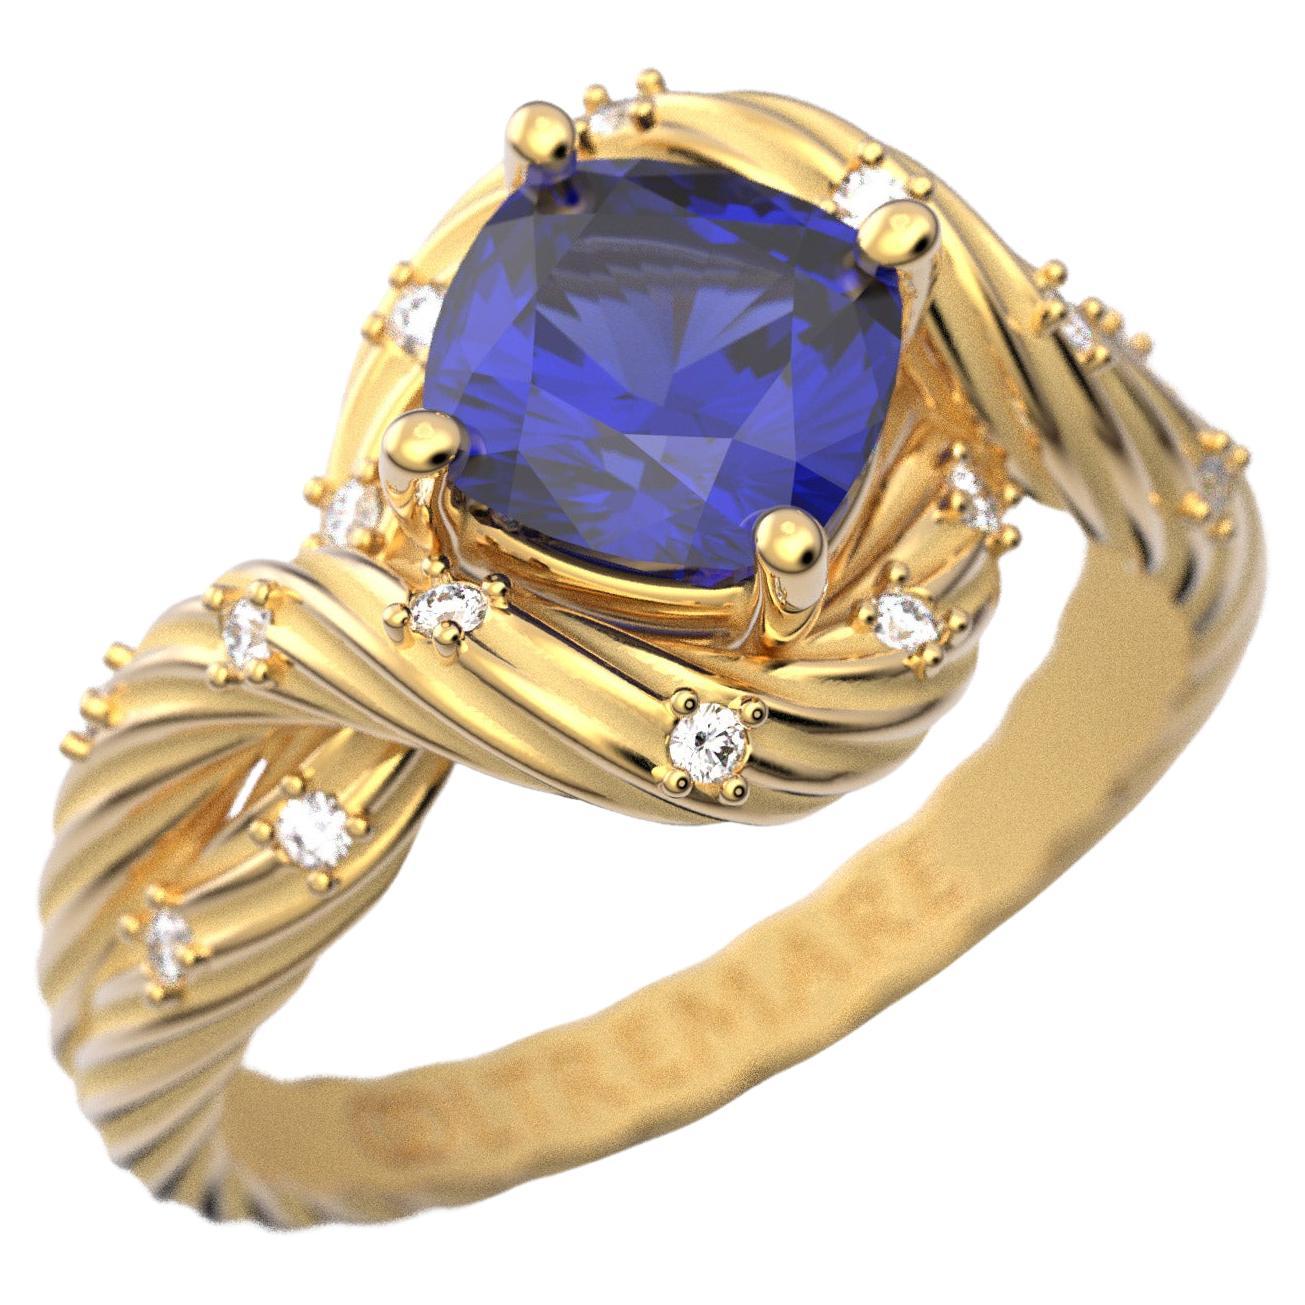 For Sale:  Tanzanite and Diamonds Statement Ring in 18k Solid Gold, Italian Fine Jewelry